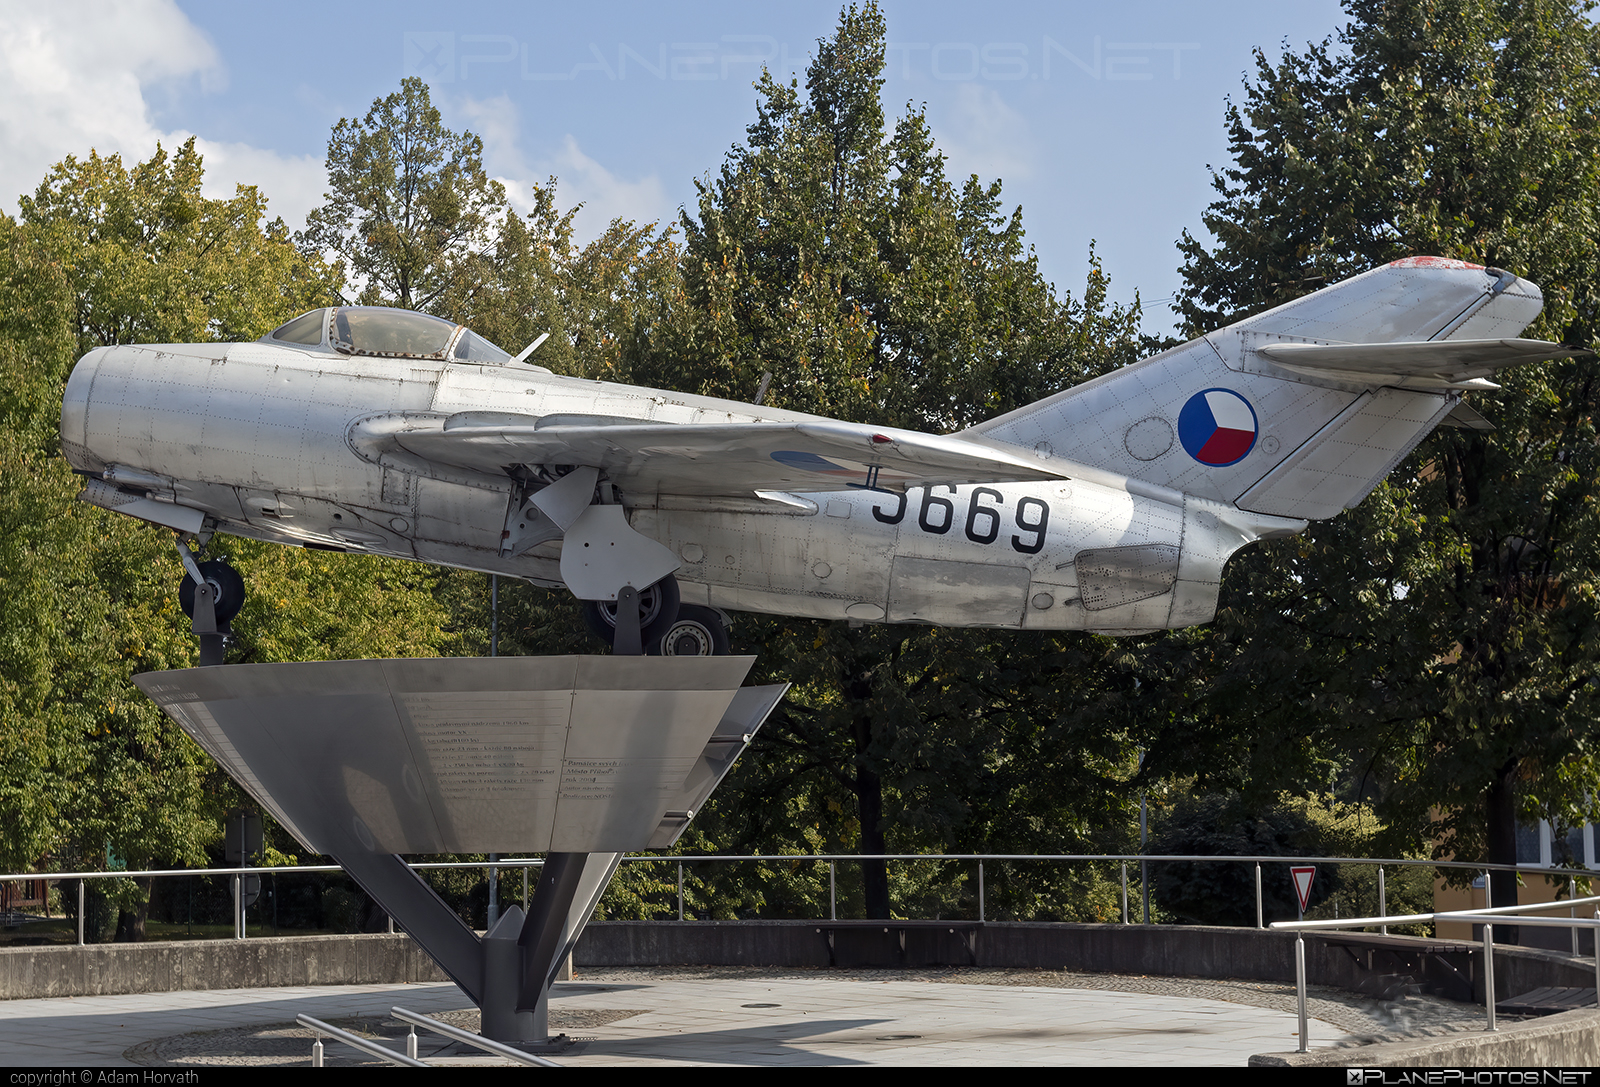 Mikoyan-Gurevich MiG-15bis - 3669 operated by Letectvo ČSĽA (Czechoslovak Air Force) #czechoslovakairforce #letectvocsla #mig #mig15 #mig15bis #mikoyangurevich